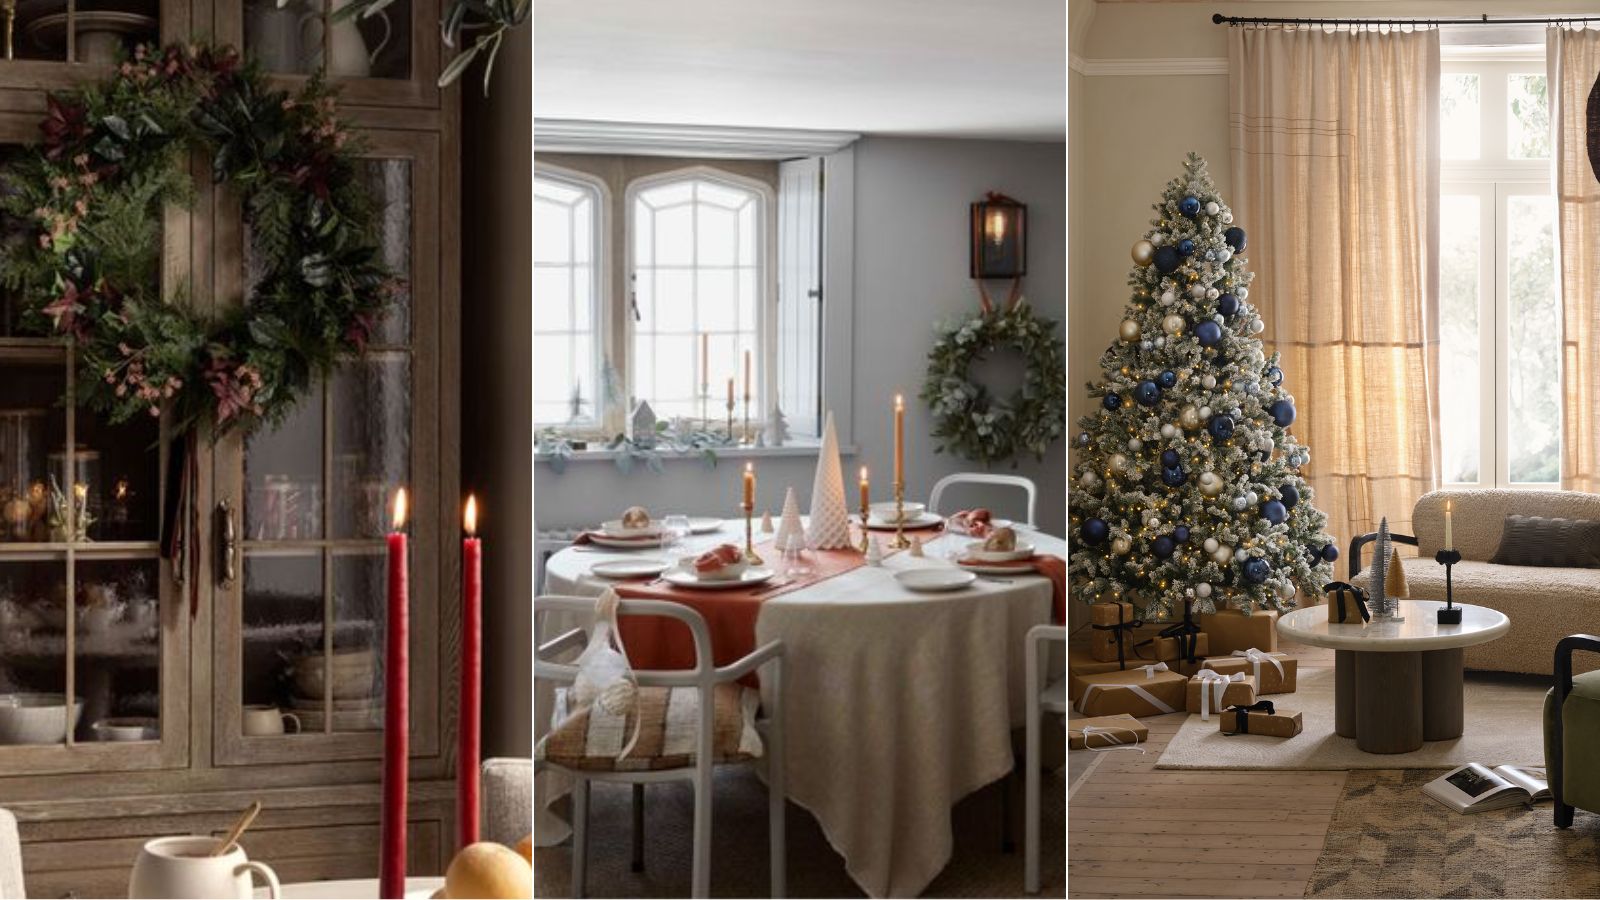 How to create farmhouse Christmas decor: experts advise